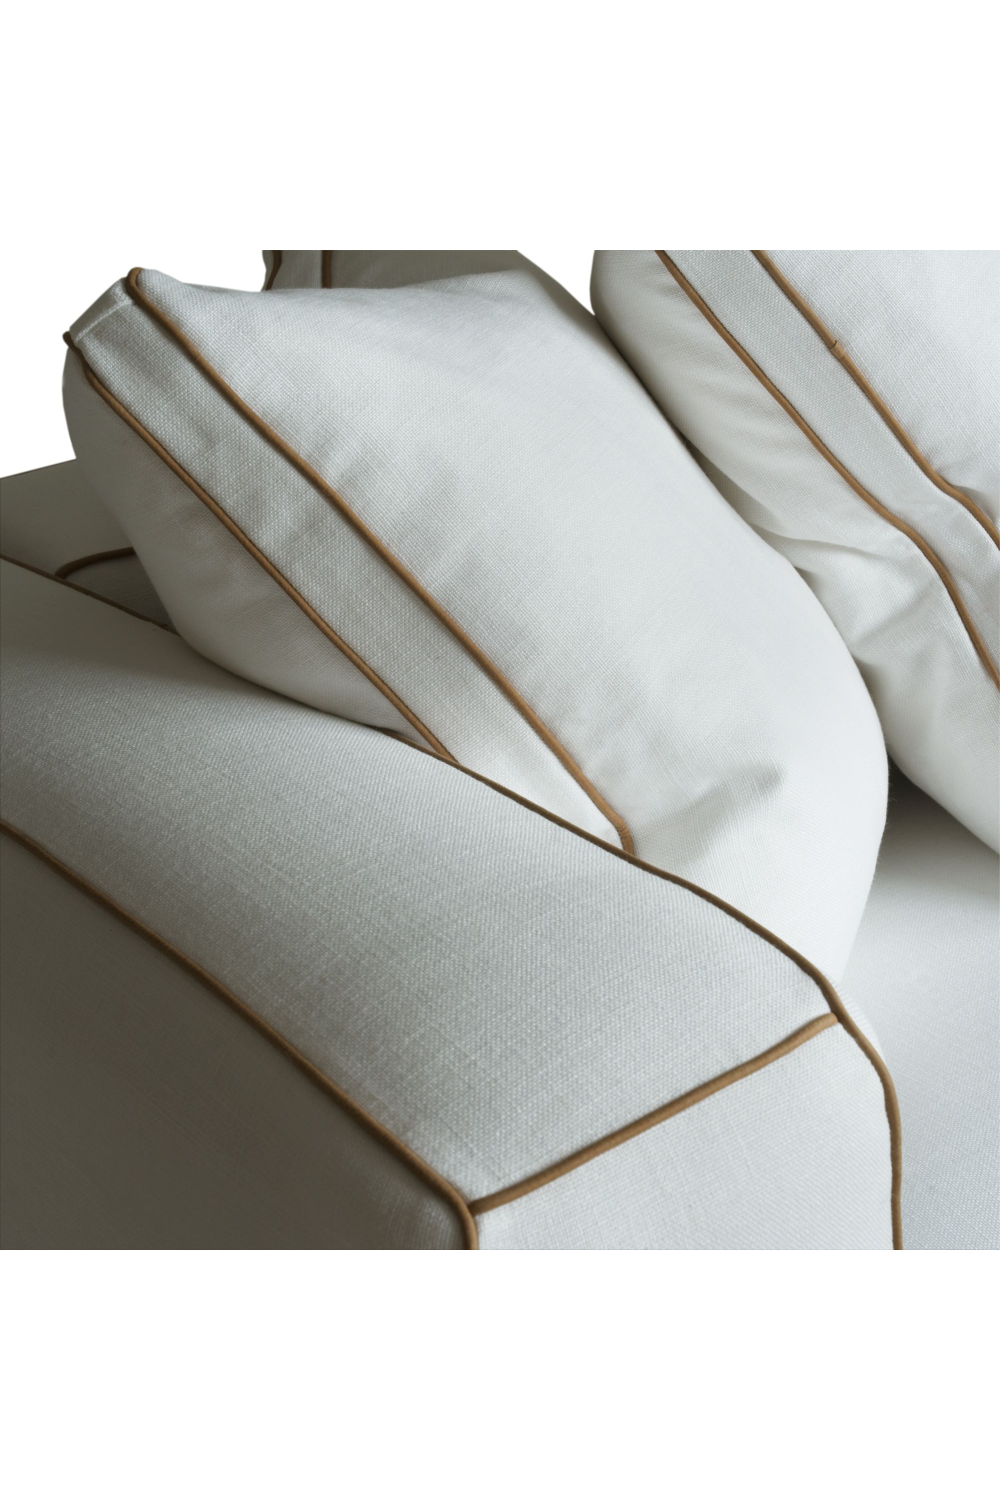 White Linen Sofa With Piping | Andrew Martin Hogarth | Oroa.com